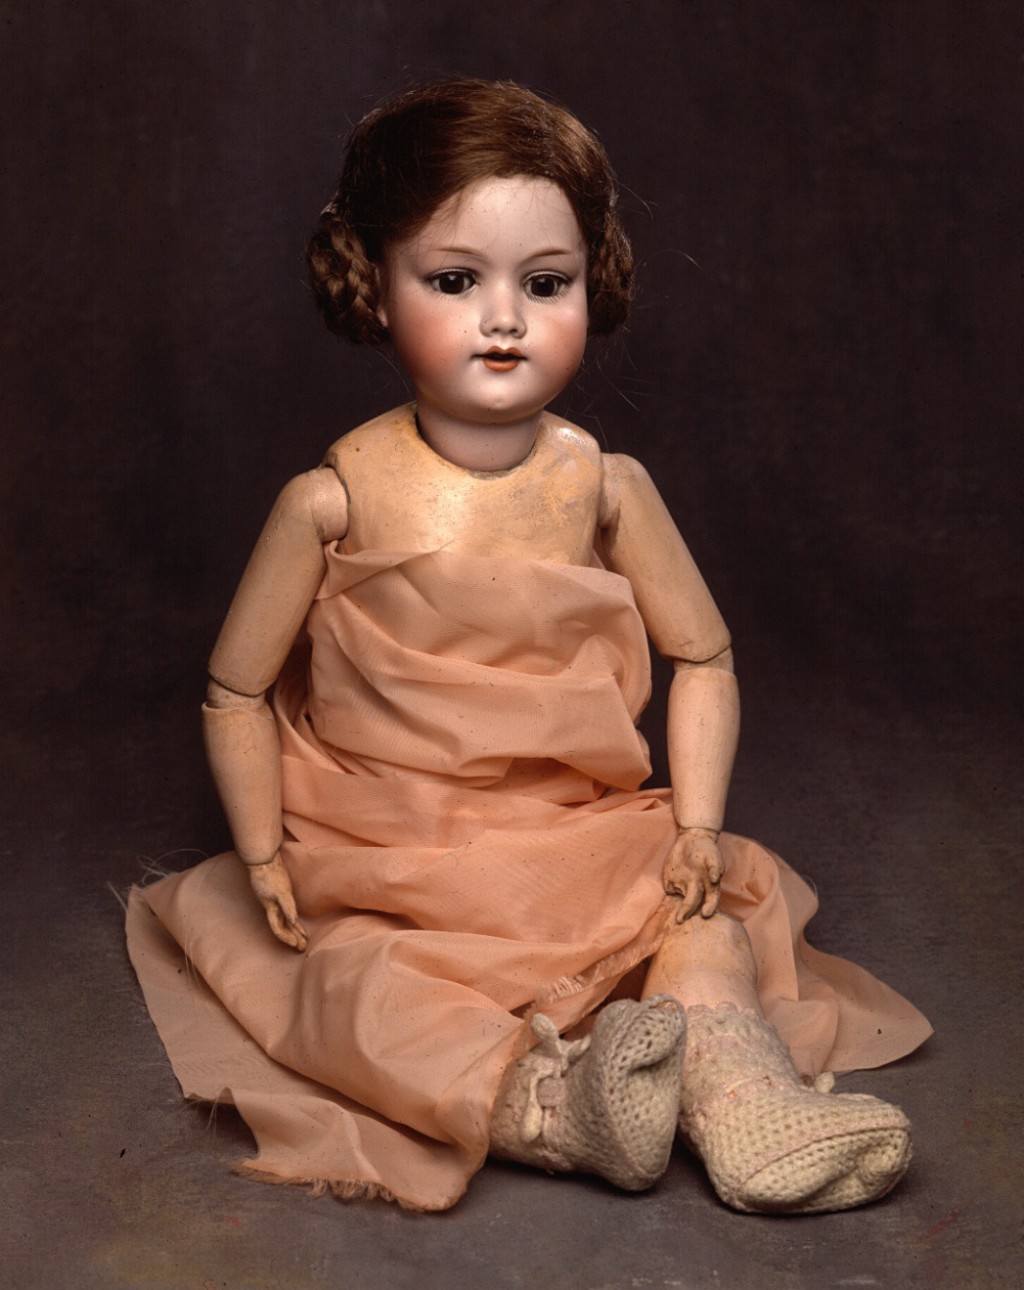 Doll from the Krakow ghetto [LCID: 1998mdfg]